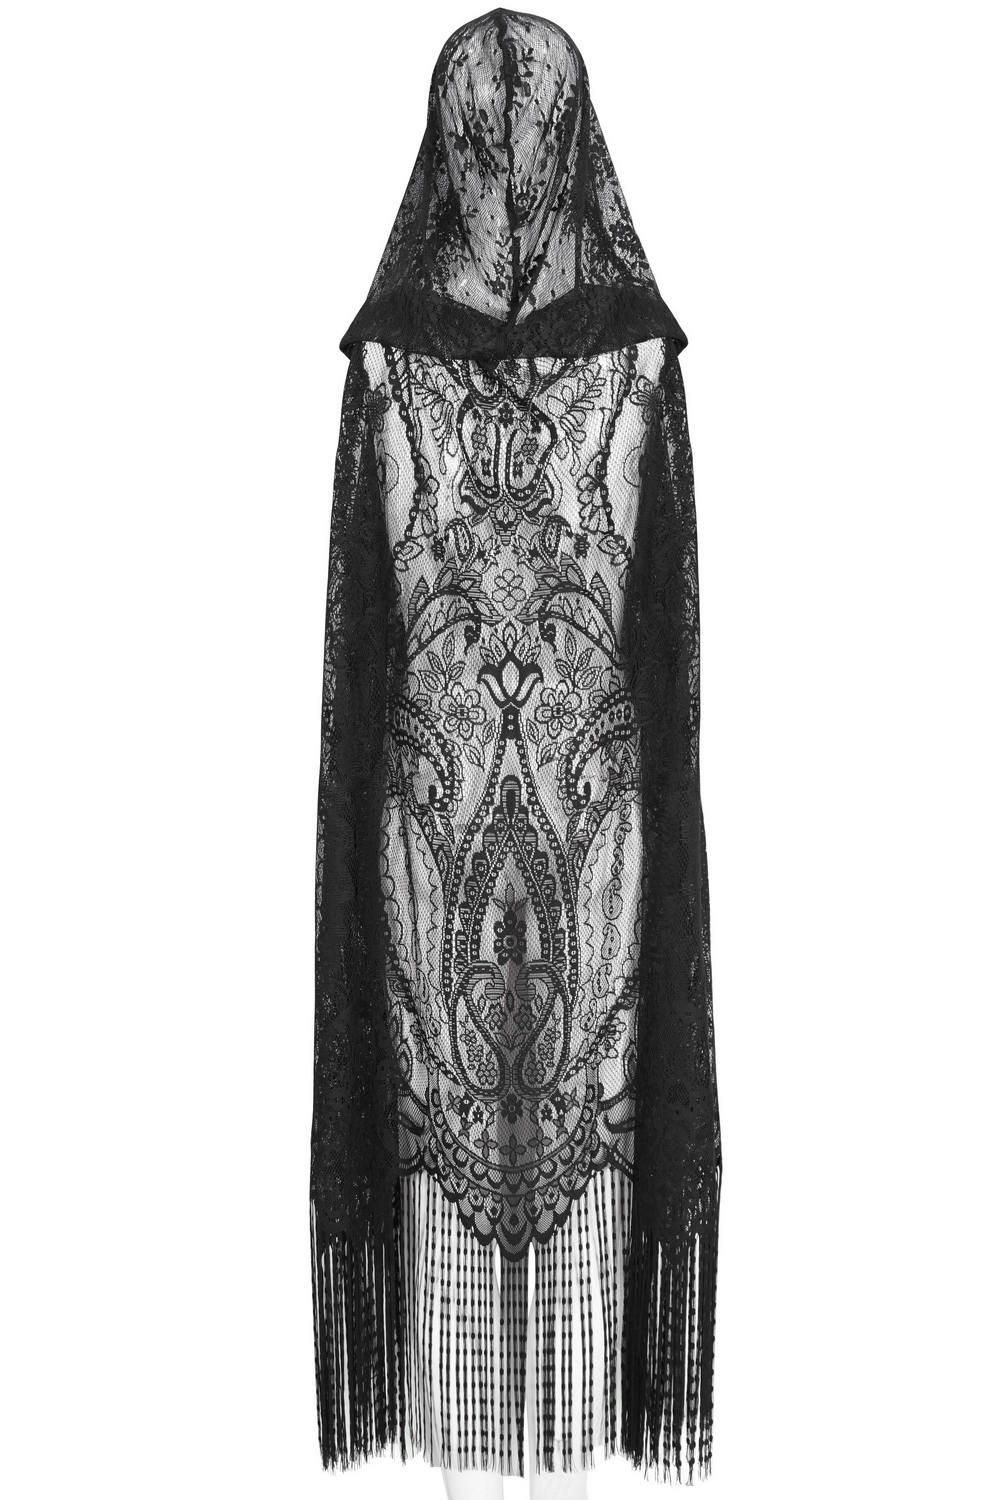 Gothic Sleeveless Hooded Lace Tasseled Cape For Women